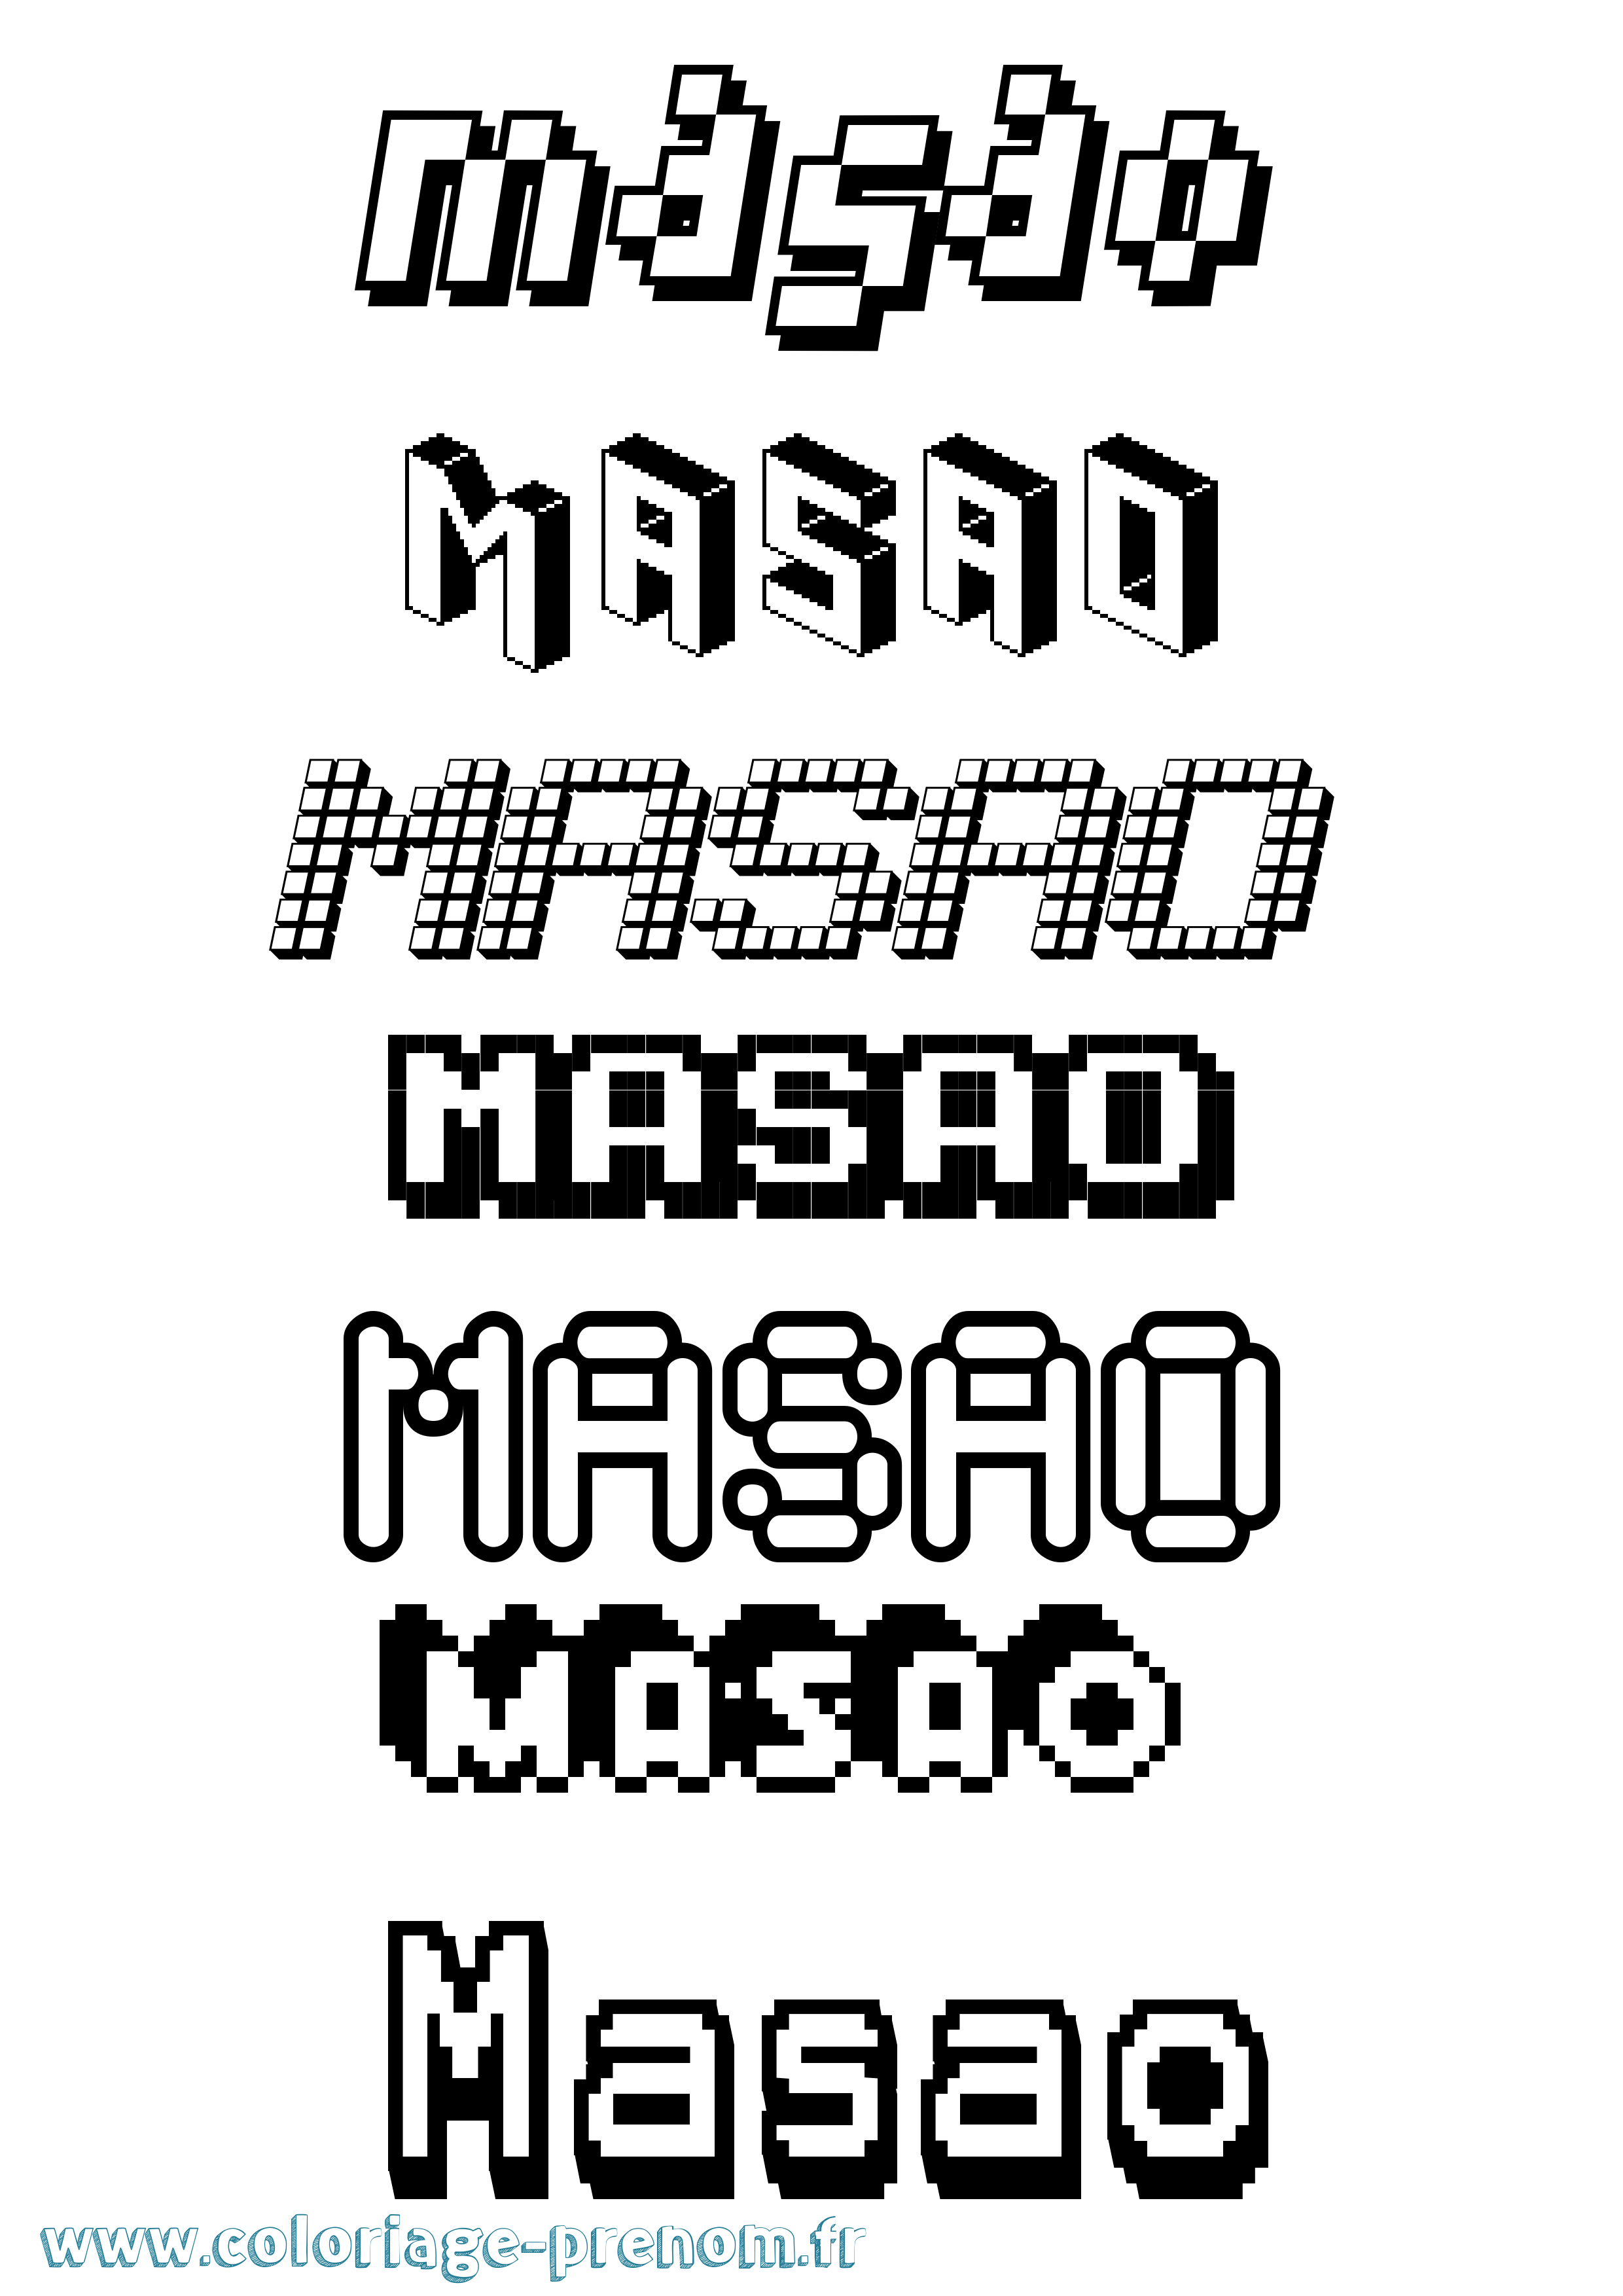 Coloriage prénom Masao Pixel